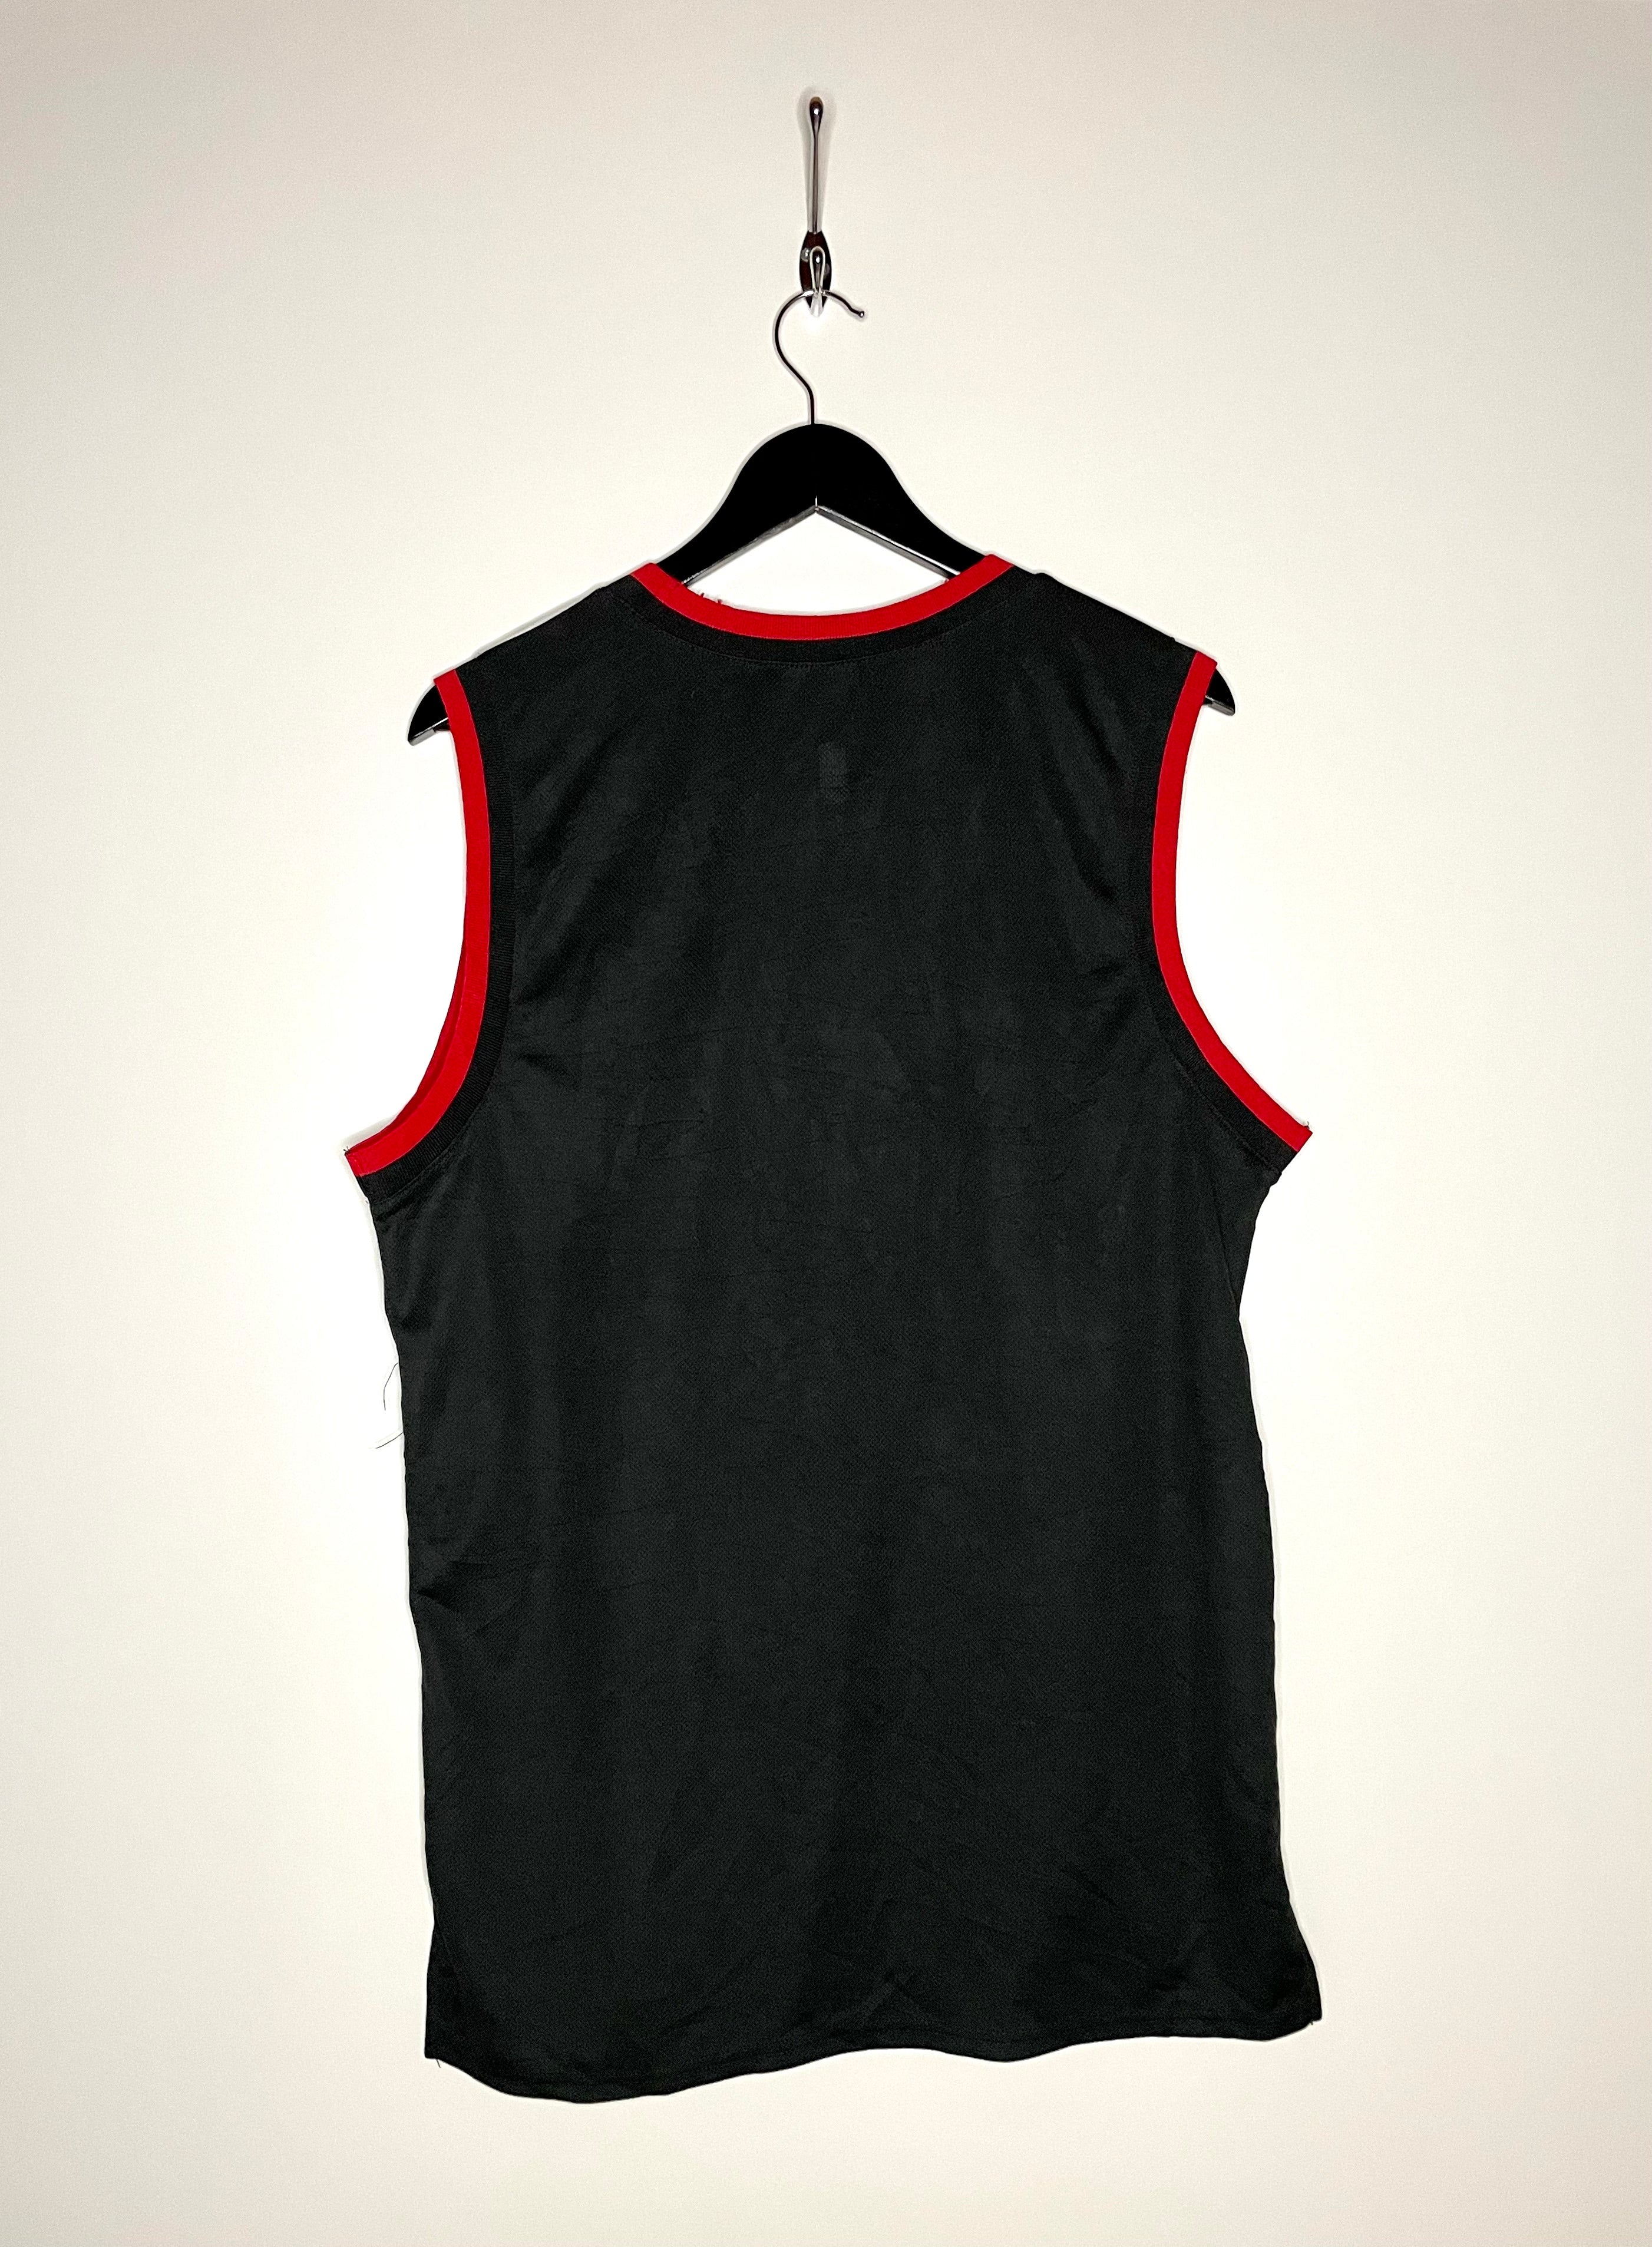 NBA Vintage Jersey Chicago Bulls Red/Black/White Size L 